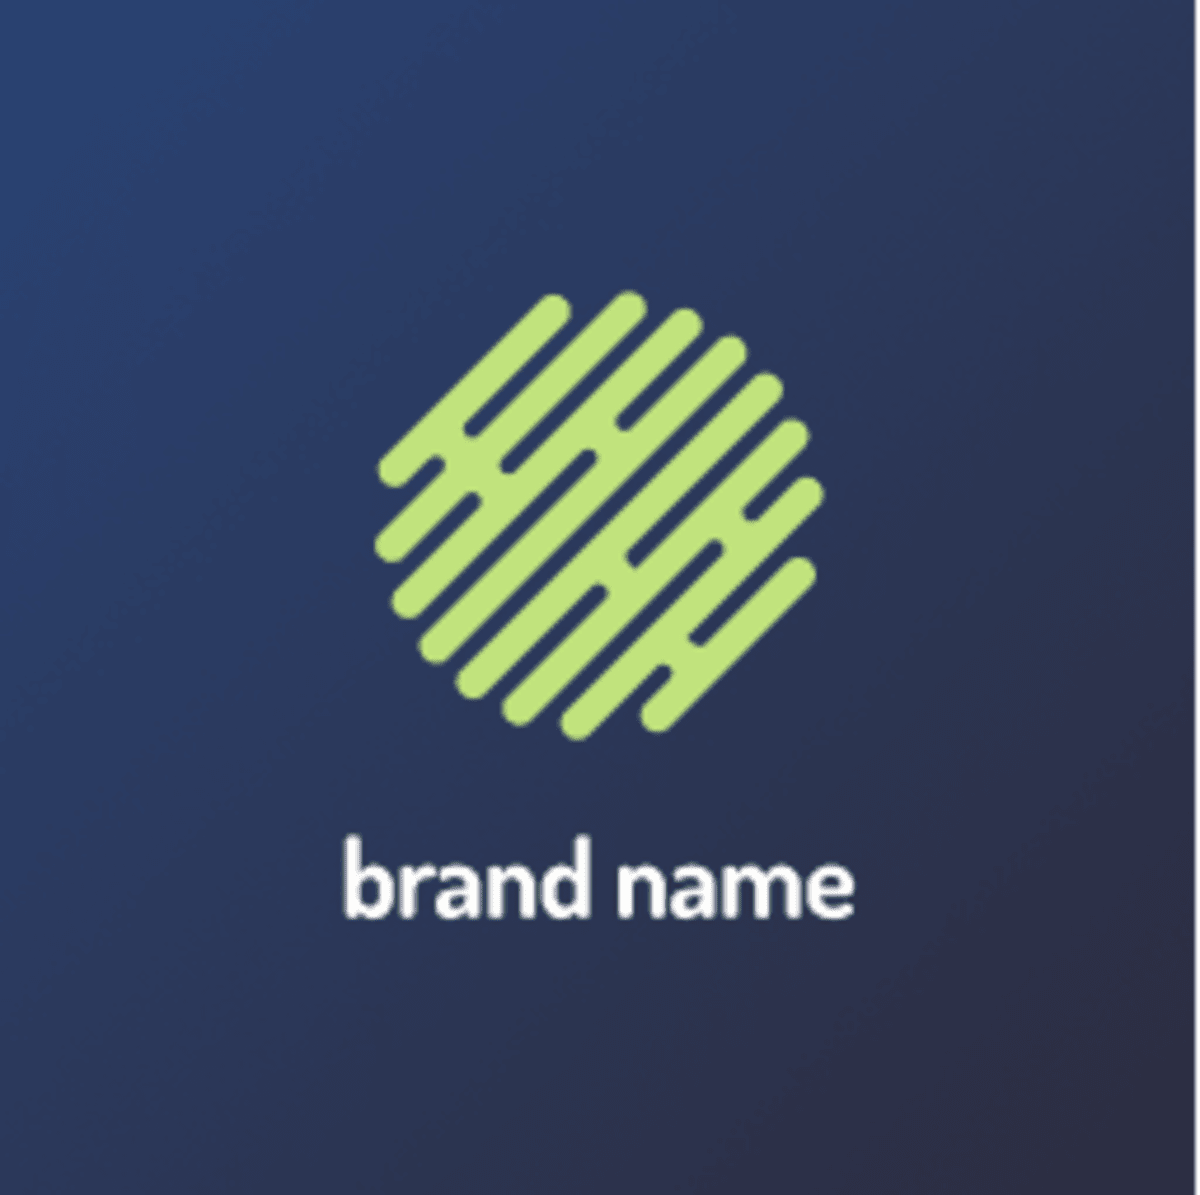 Abstract Mark logo -Types of Logos